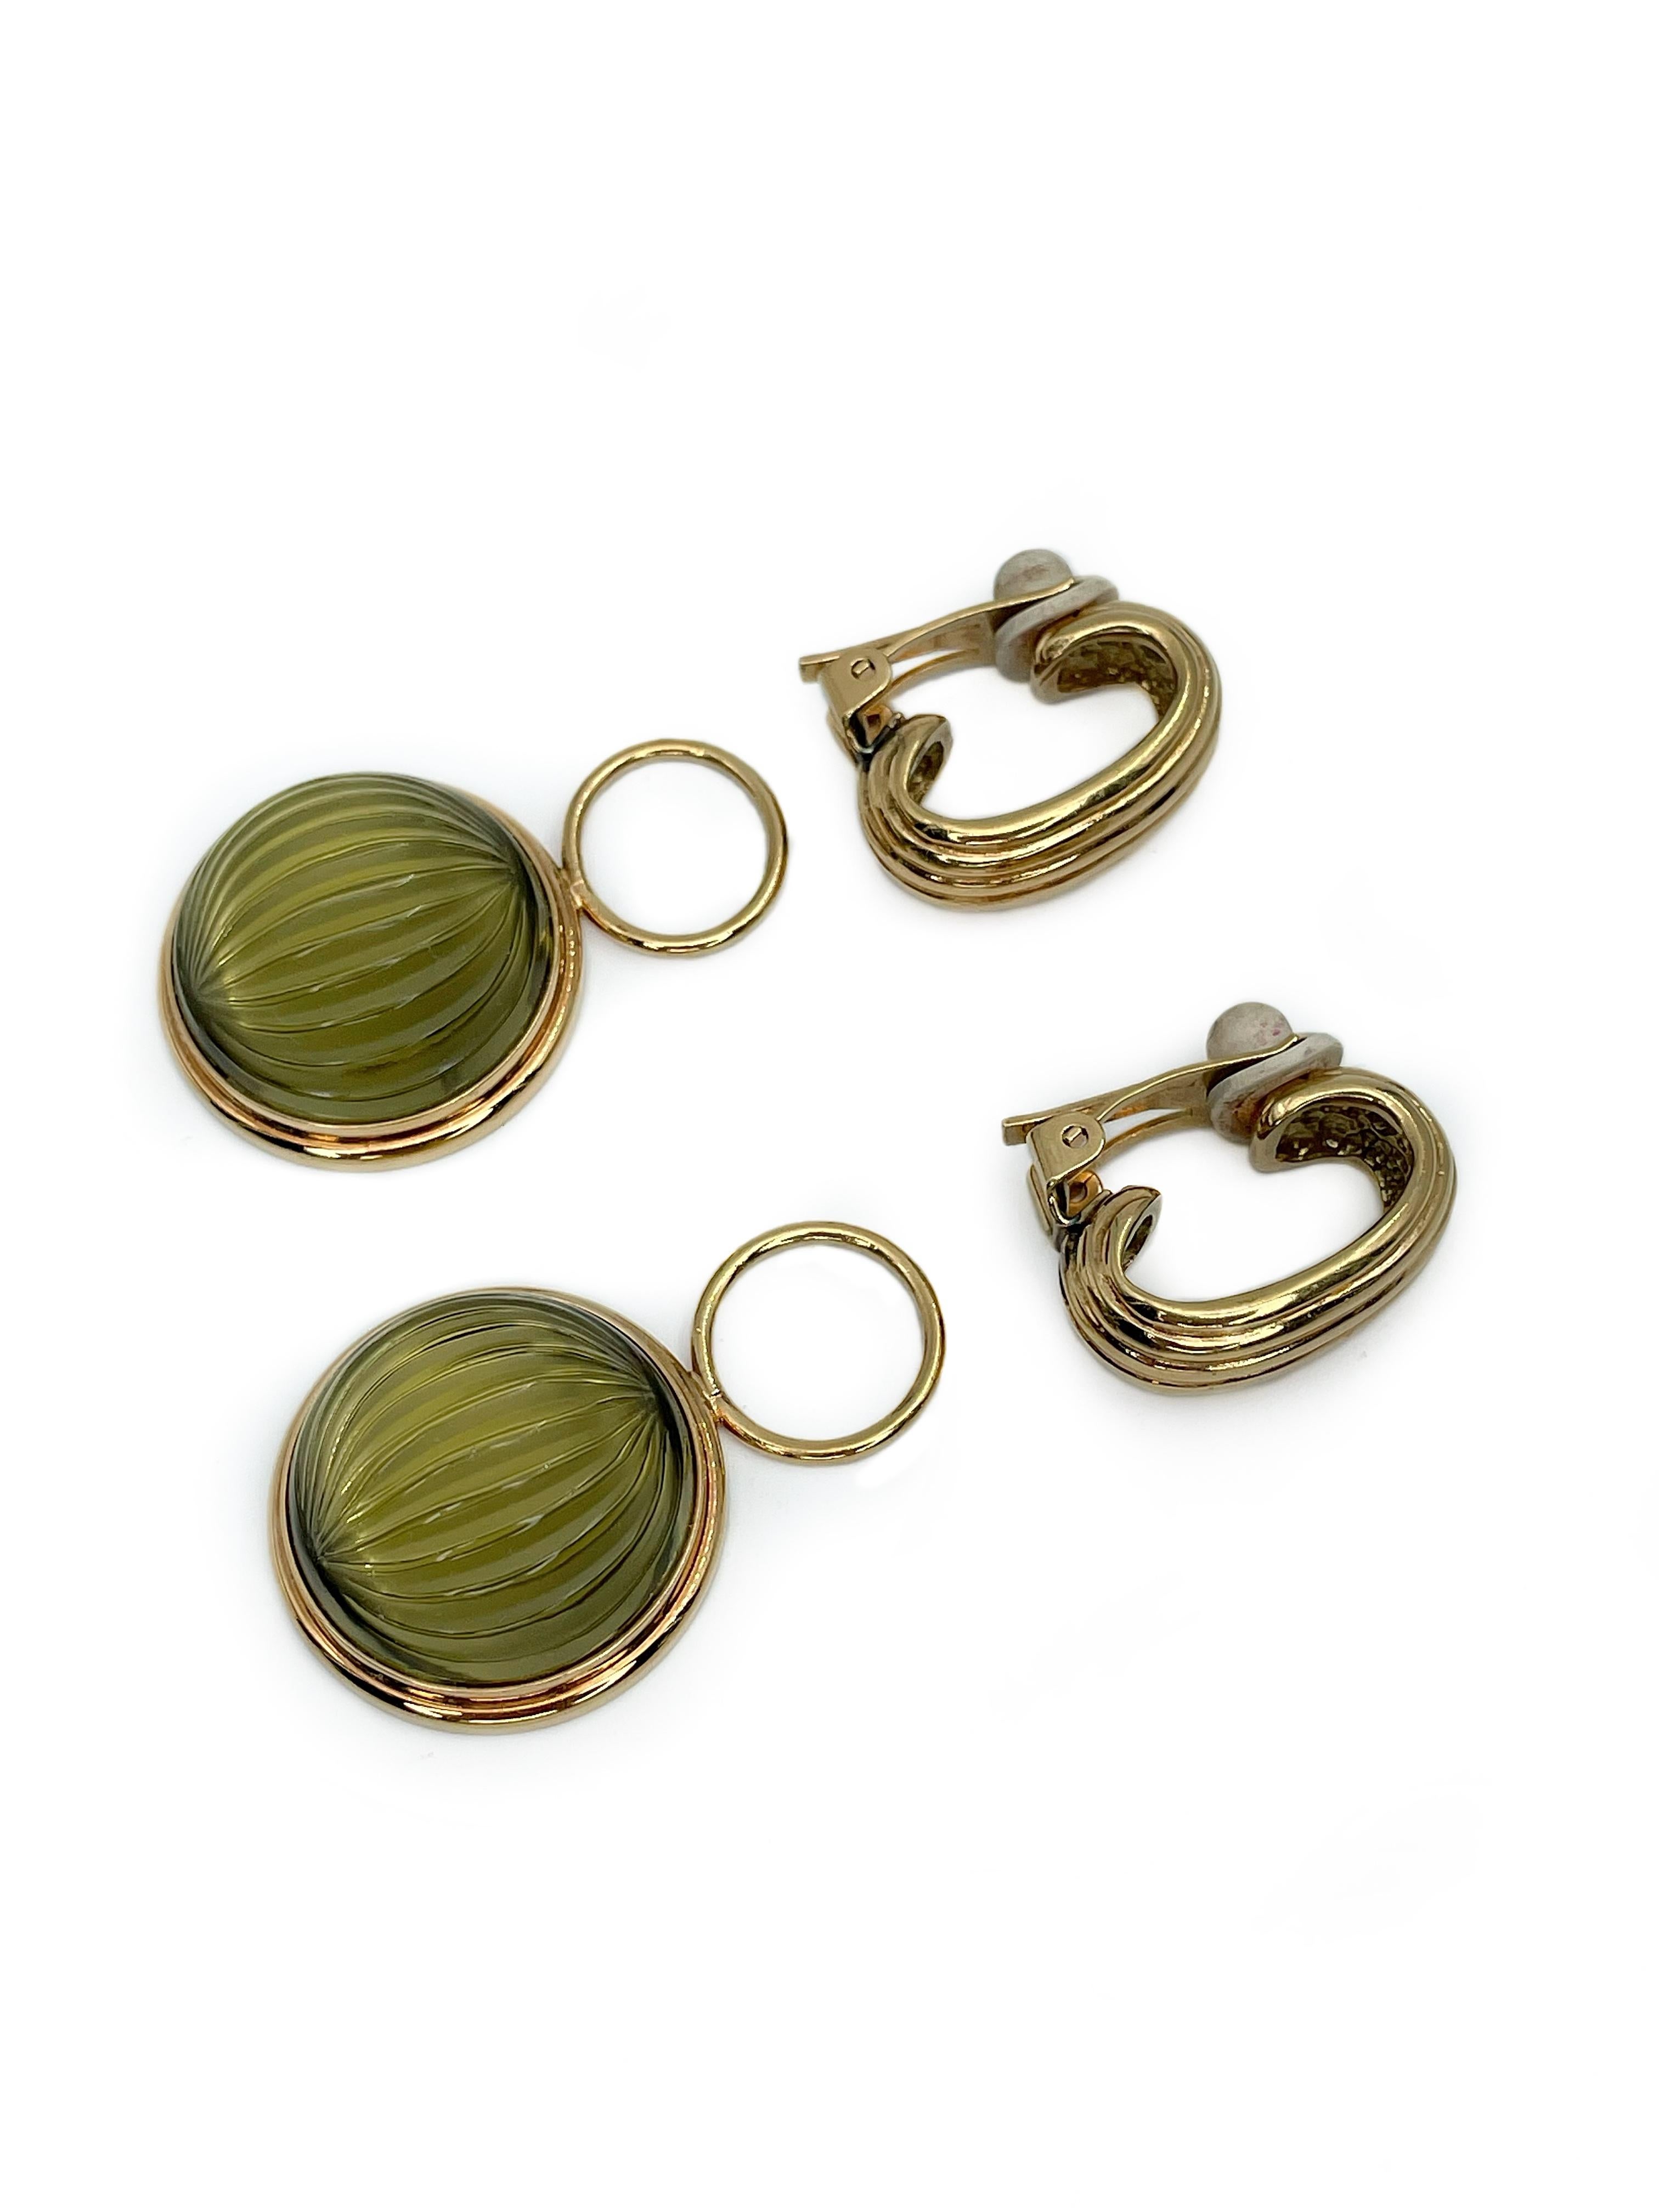 vintage lalique earrings